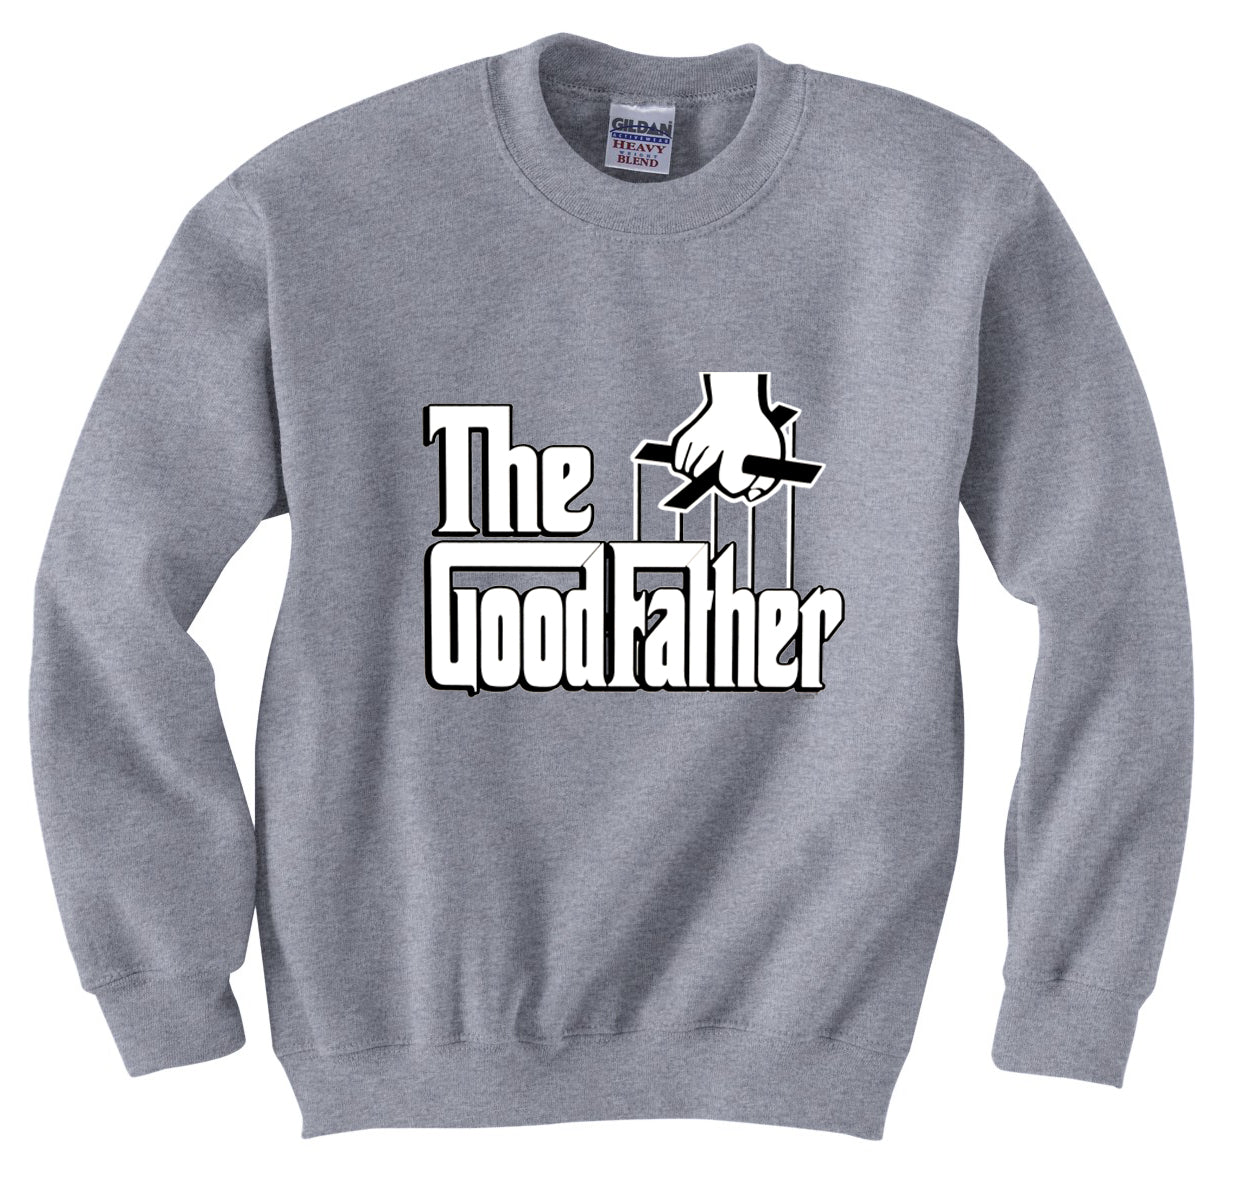 The Good Father Crew Neck Sweatshirt